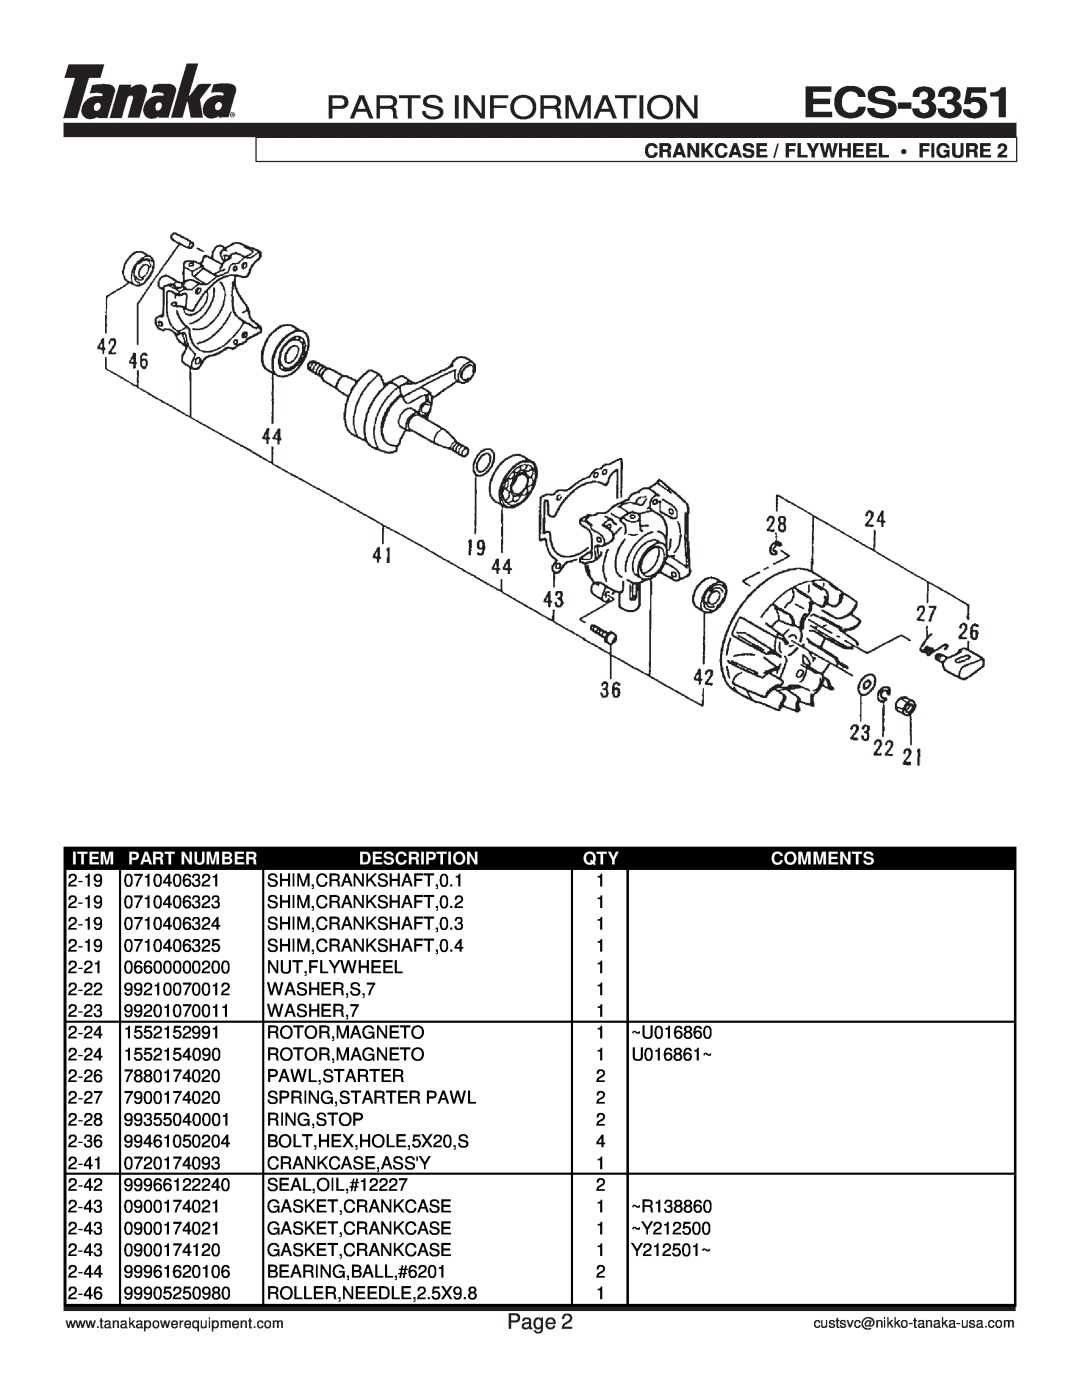 Tanaka ECS-3351/B manual Crankcase / Flywheel Figure, Parts Information, Page, Part Number, Description, Comments 